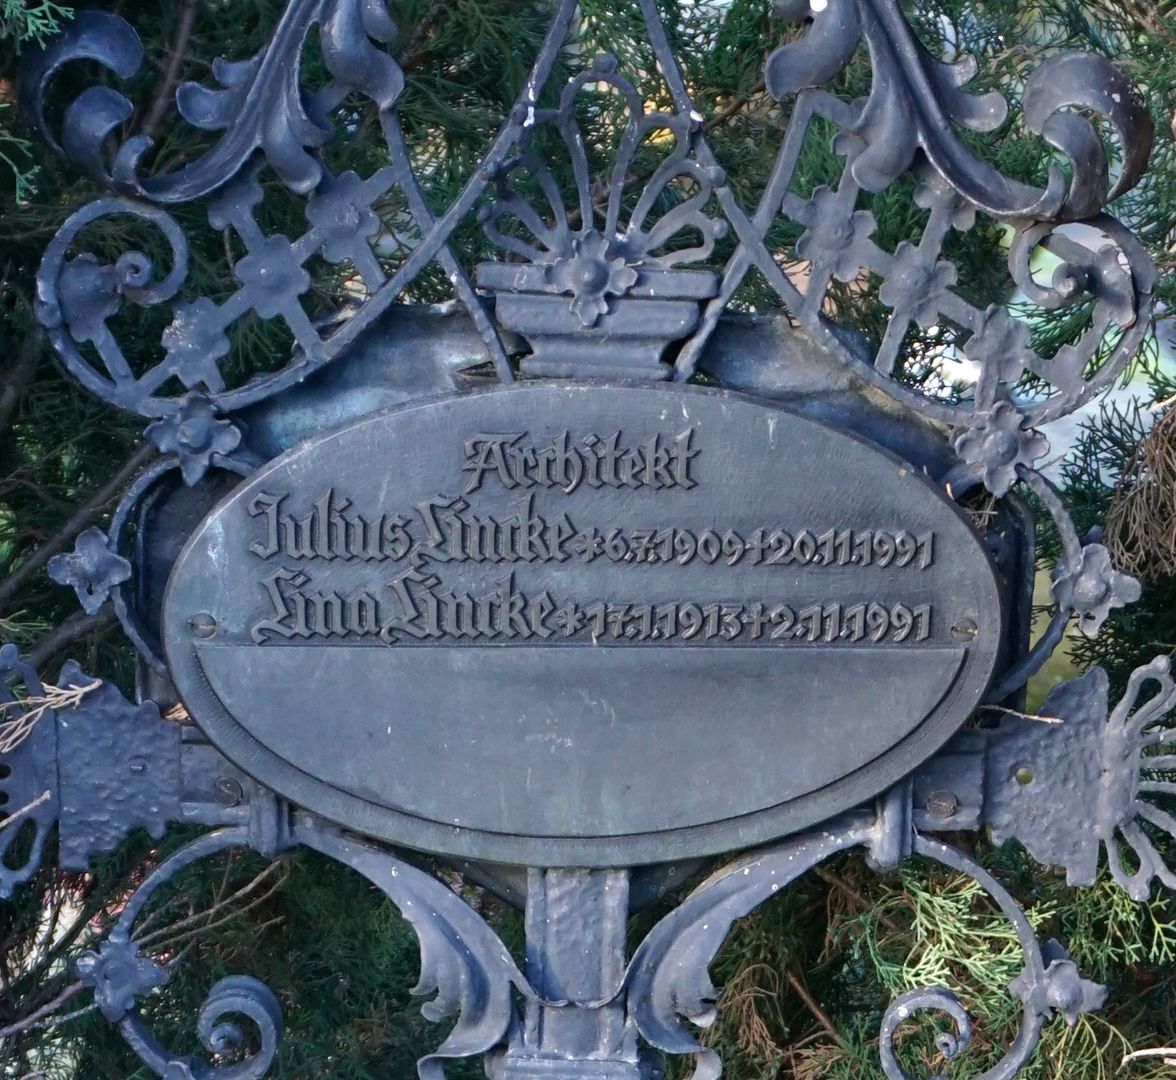 Johannisfriedhof grave site 778 Architect Julius Lincke and wife Lina Lincke